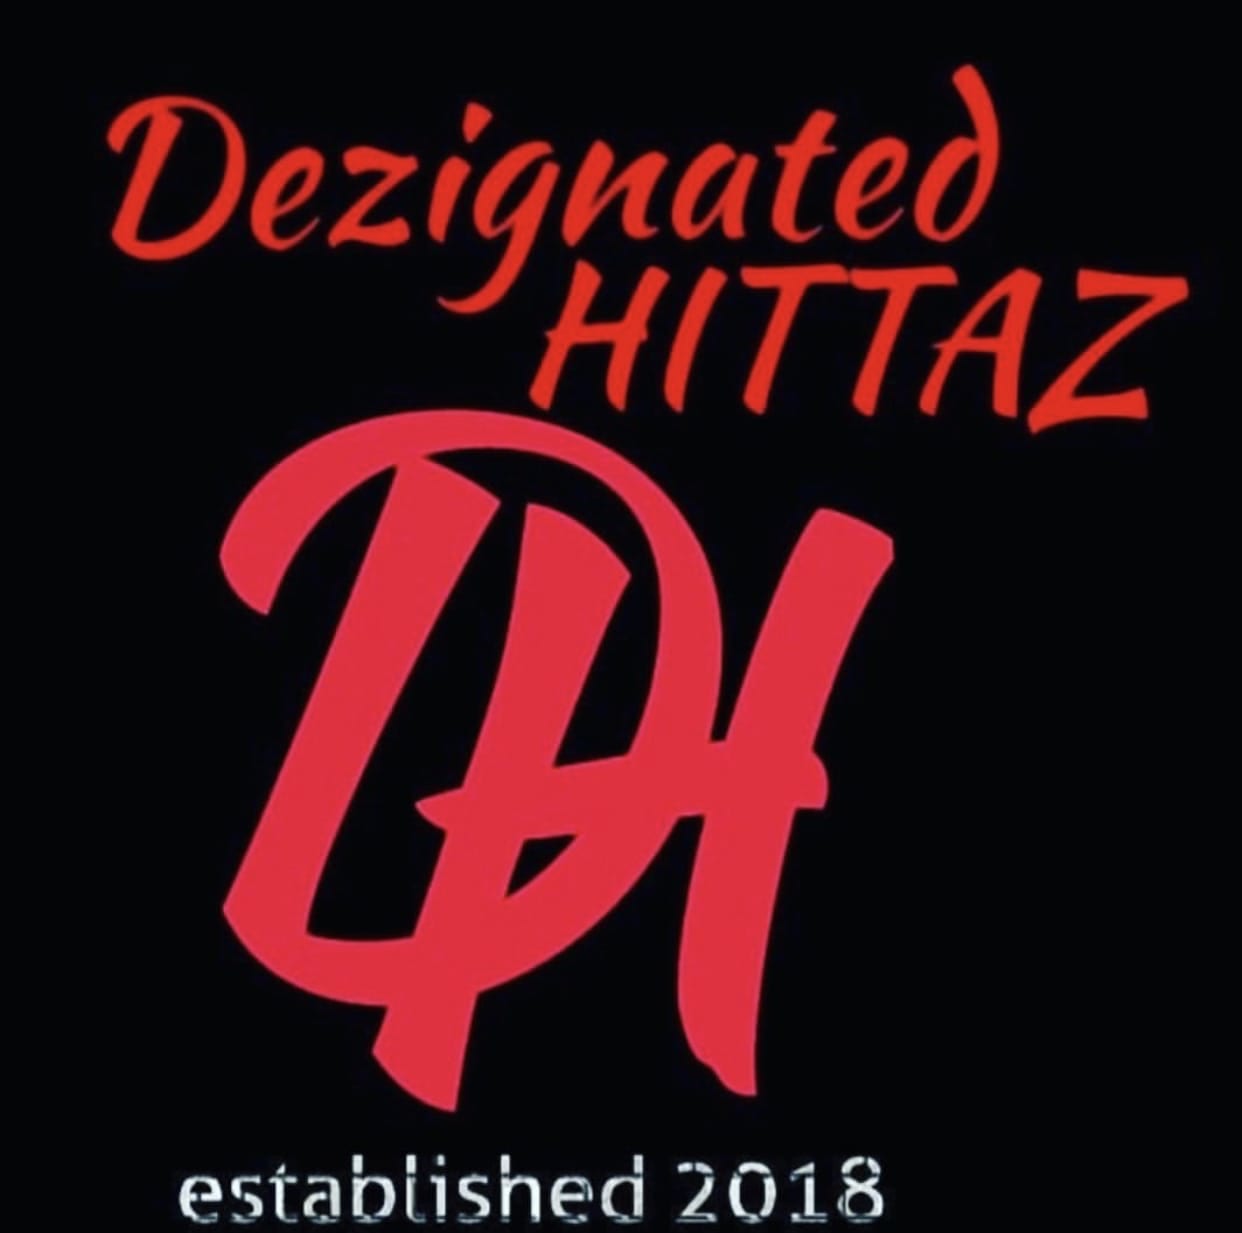 Dezignated Hittaz